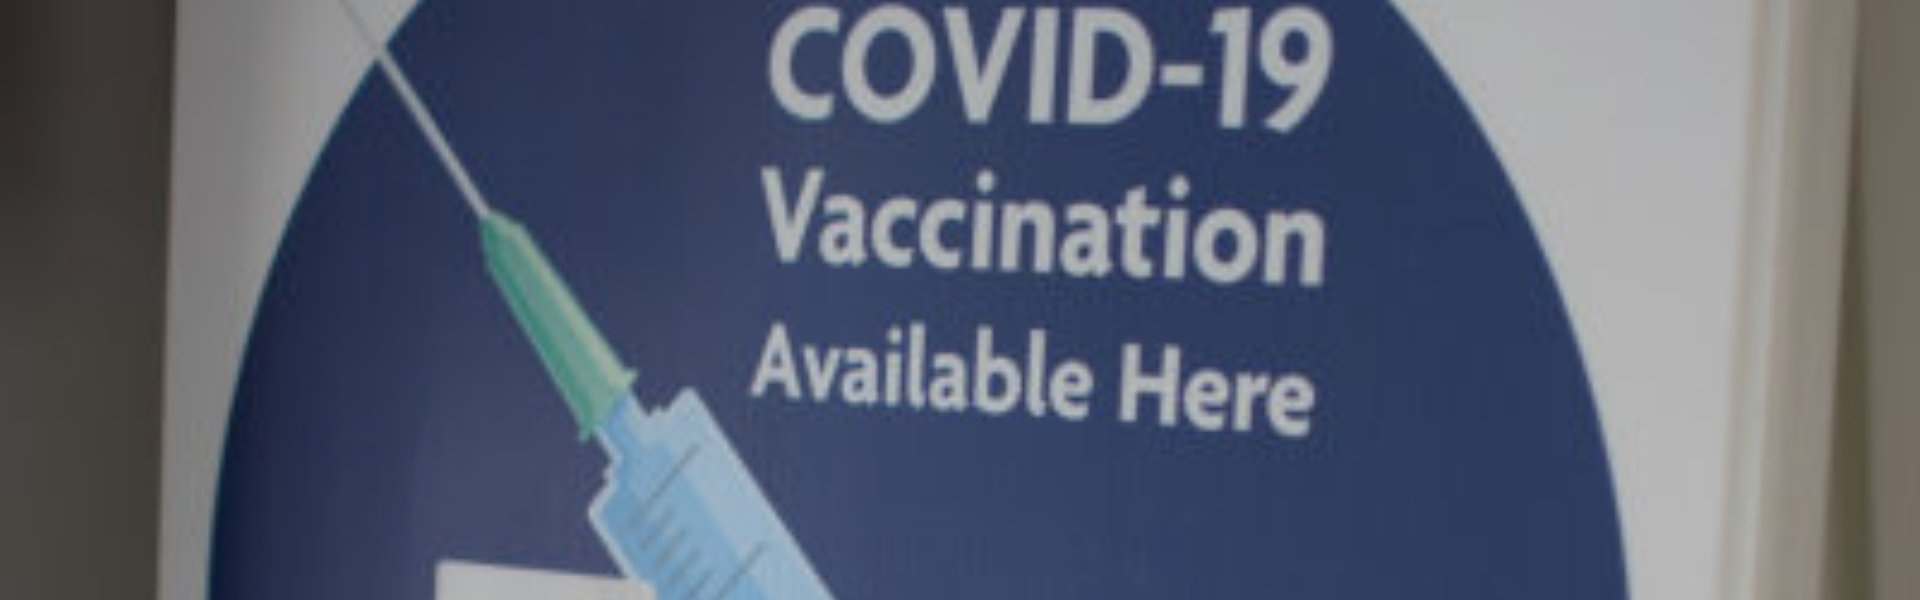 covid vaccination poster